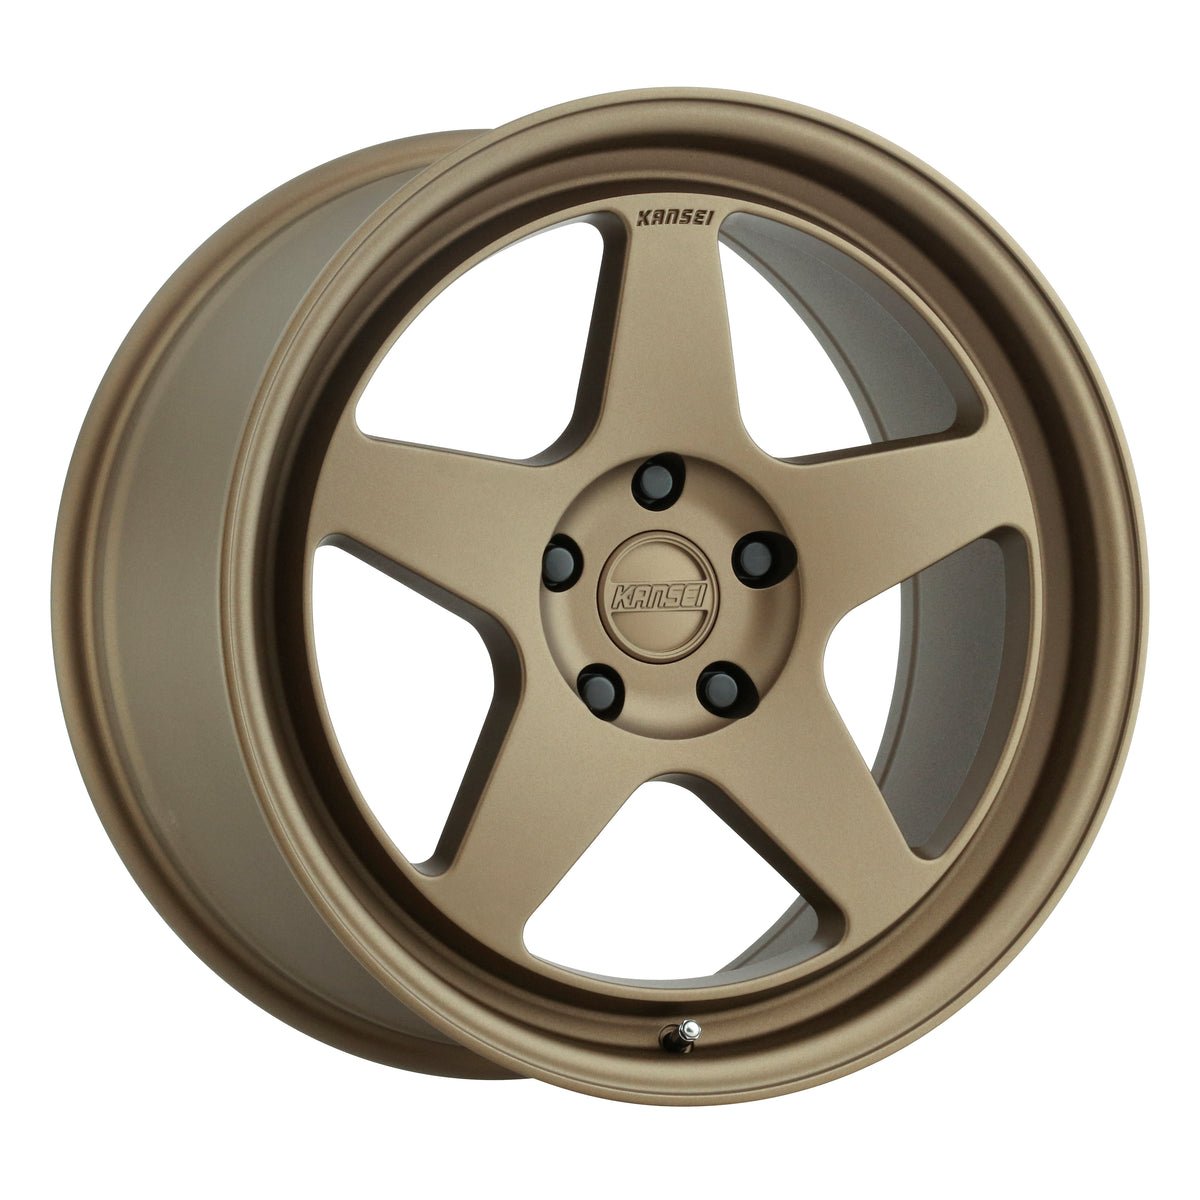 K12B KNP Wheel, Size: 17" x 8.50", Bolt Pattern: 5 x 127 mm, Backspace: 4.36" [Finish: Bronze]